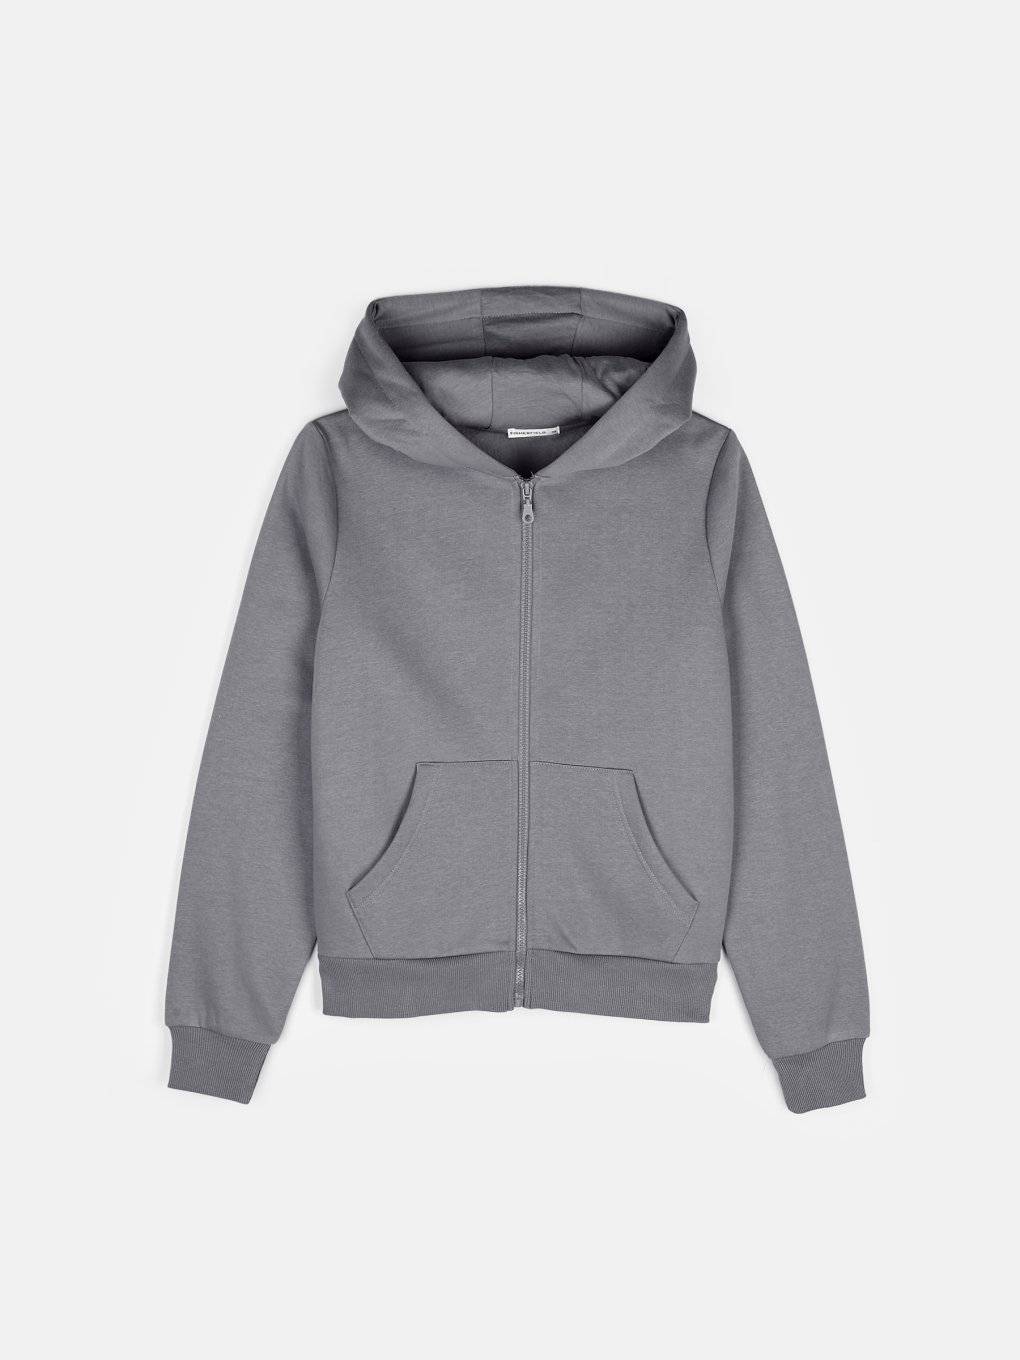 Basic zip-up hoodie with kangaroo pocket